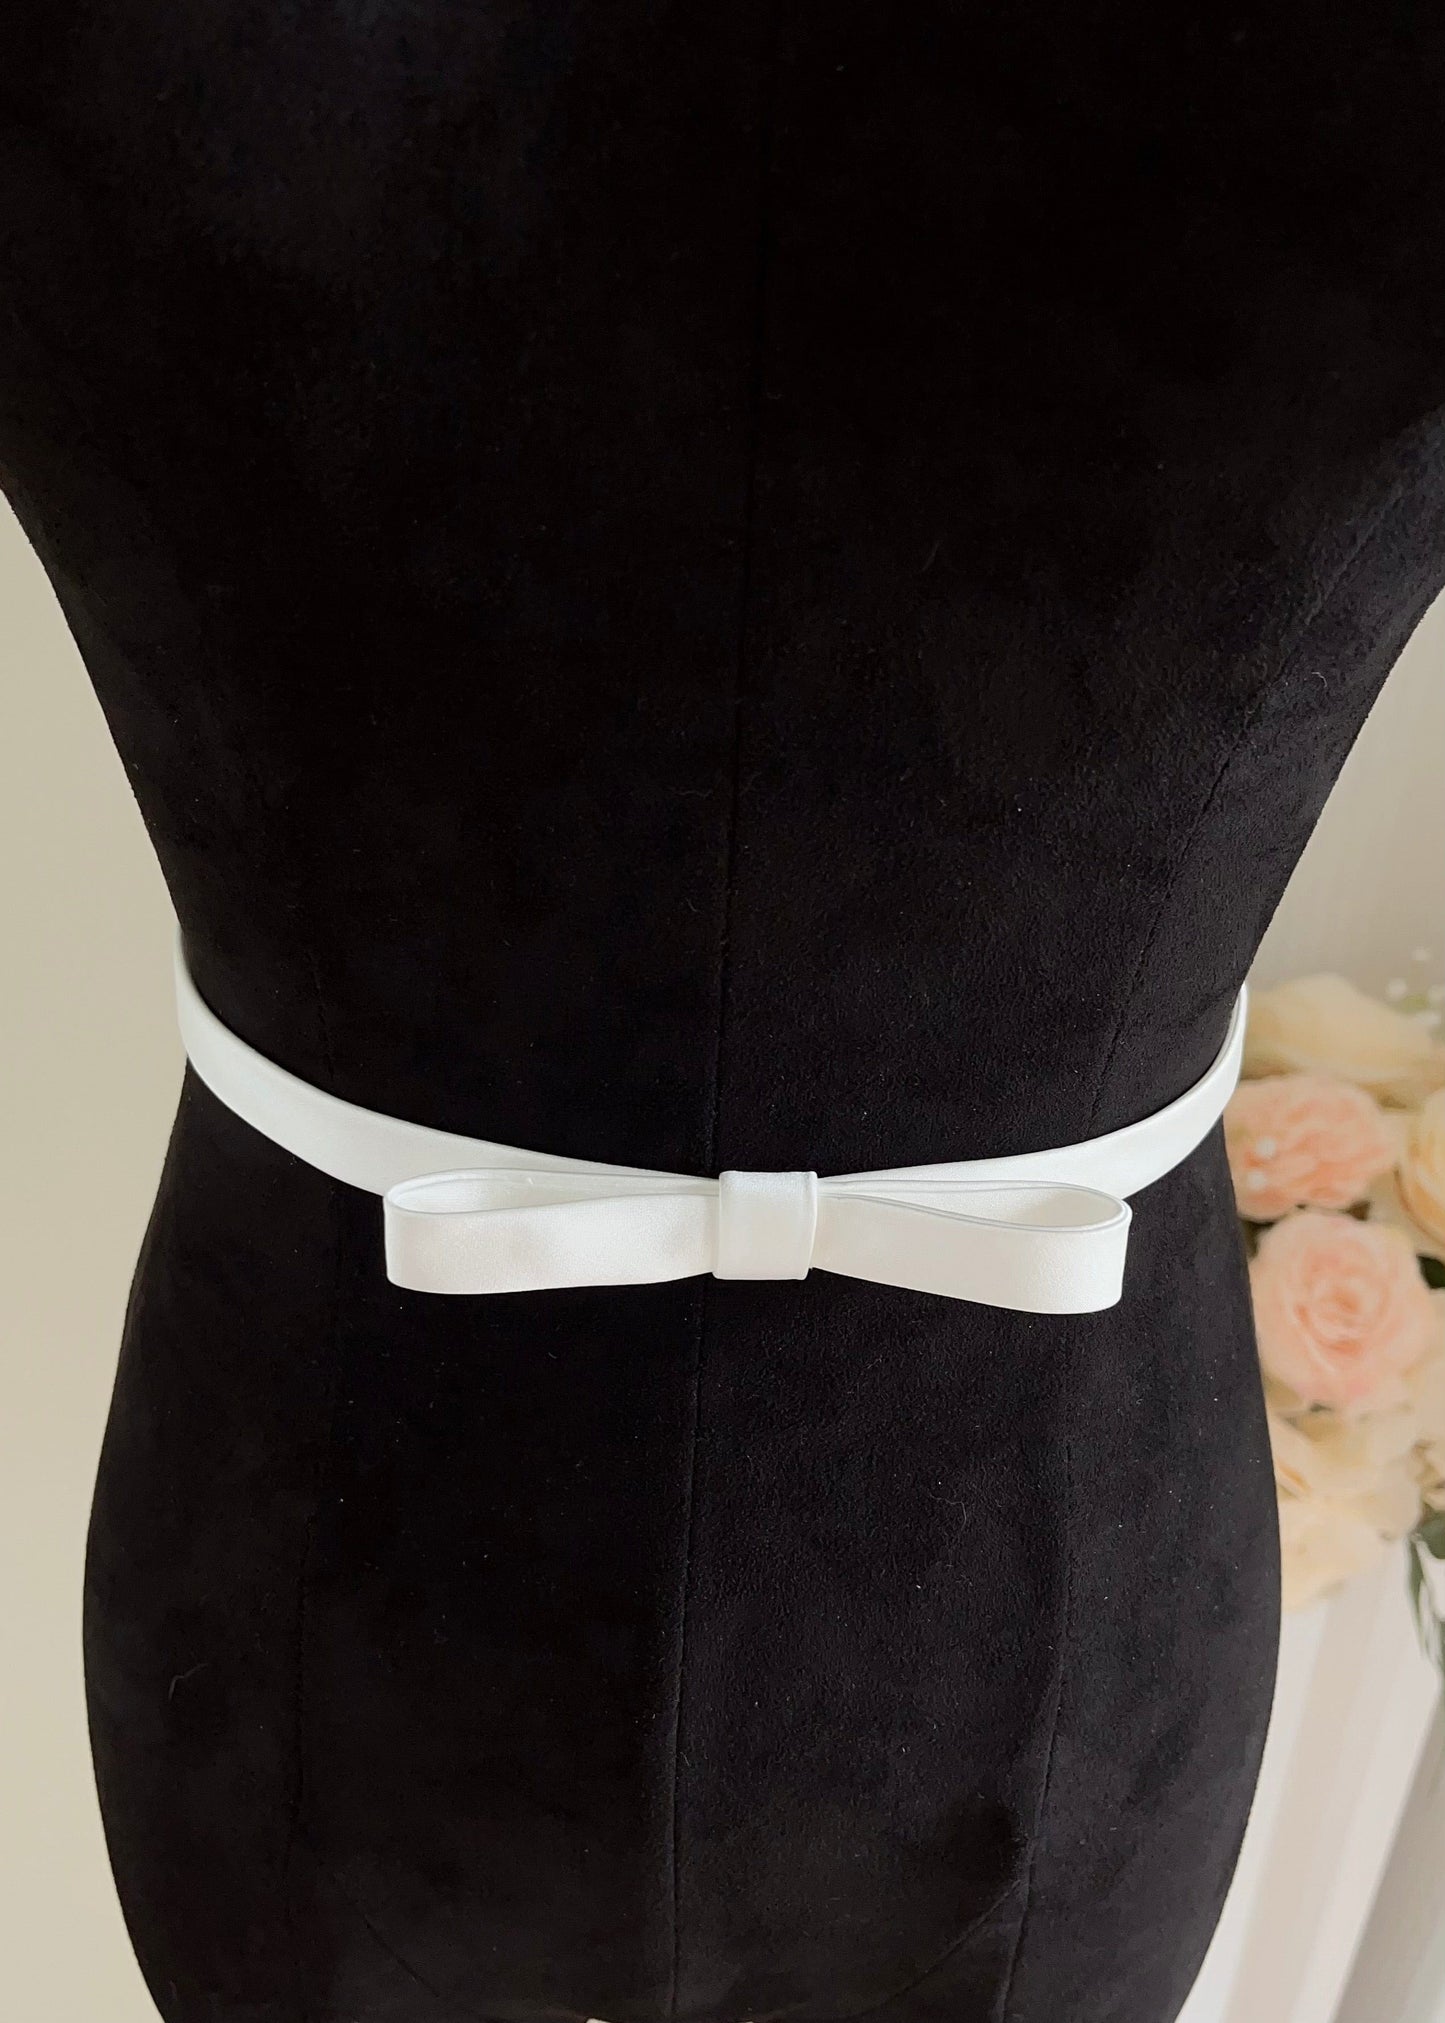 Bieauli belts LExquisite bow belts, wedding belts, ribbons, thin belts, wedding dress accessories